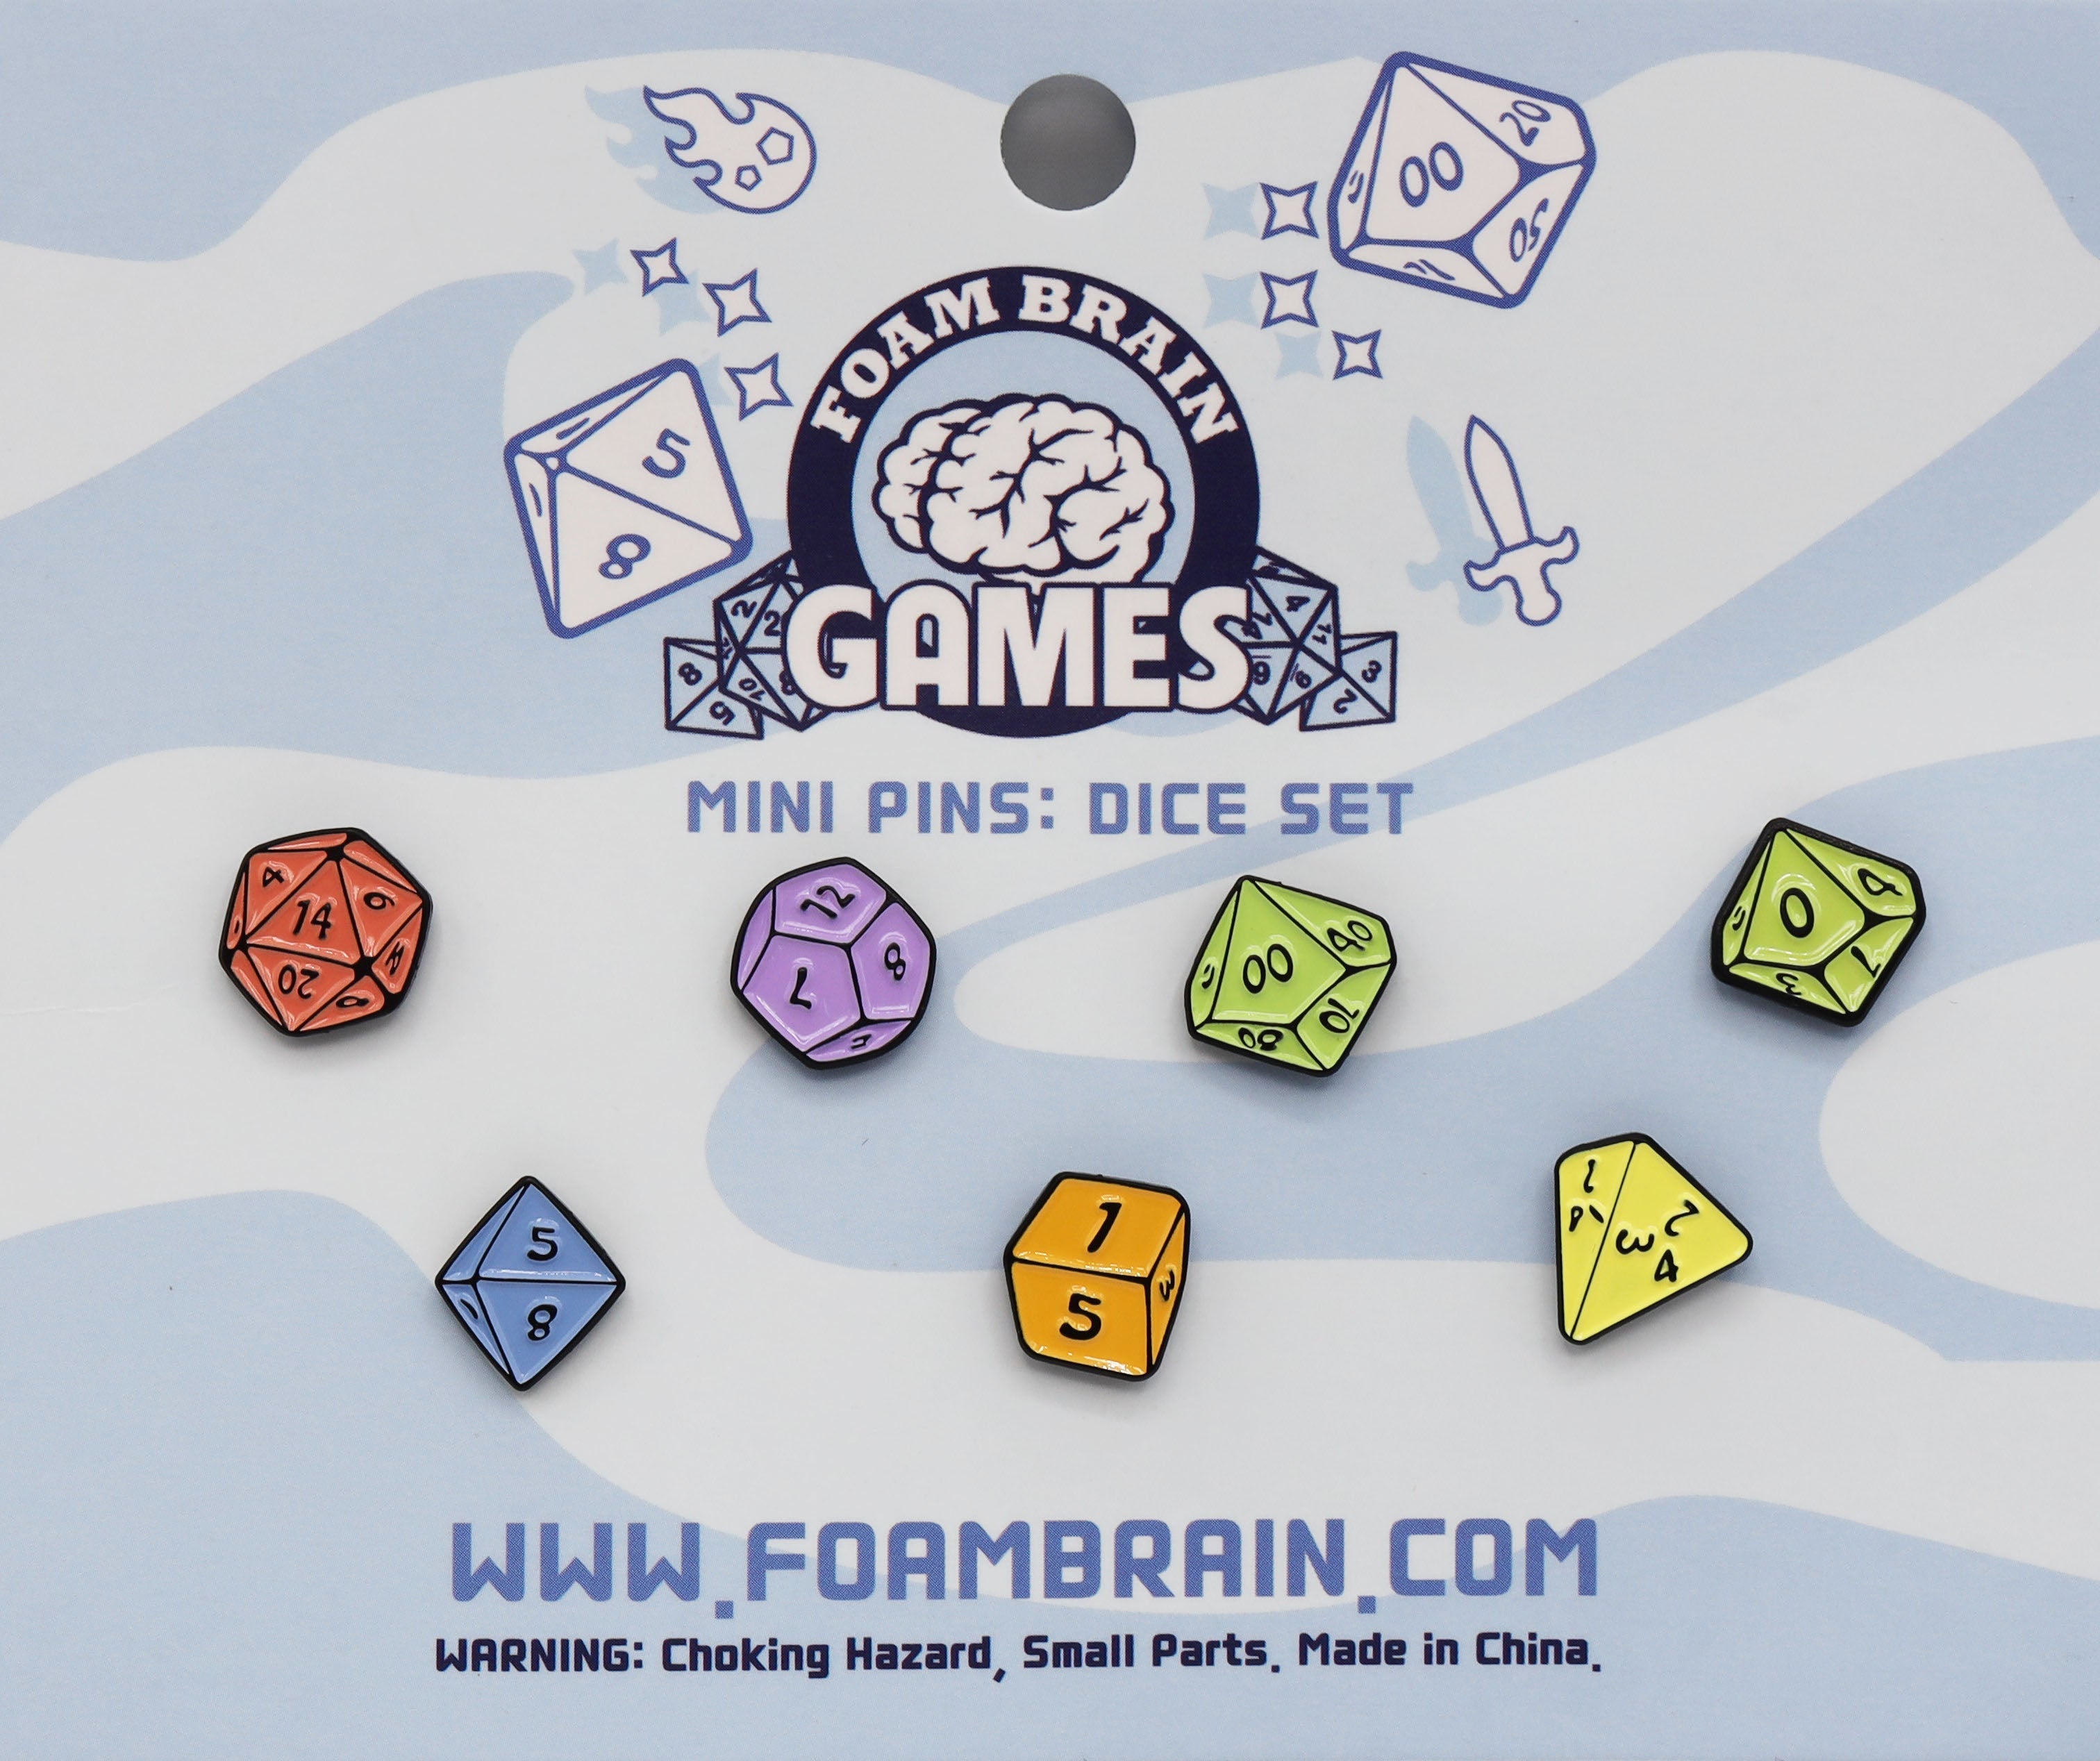 Mini Pins: Dice Set Enamel Pin Foam Brain Games | D20 Games